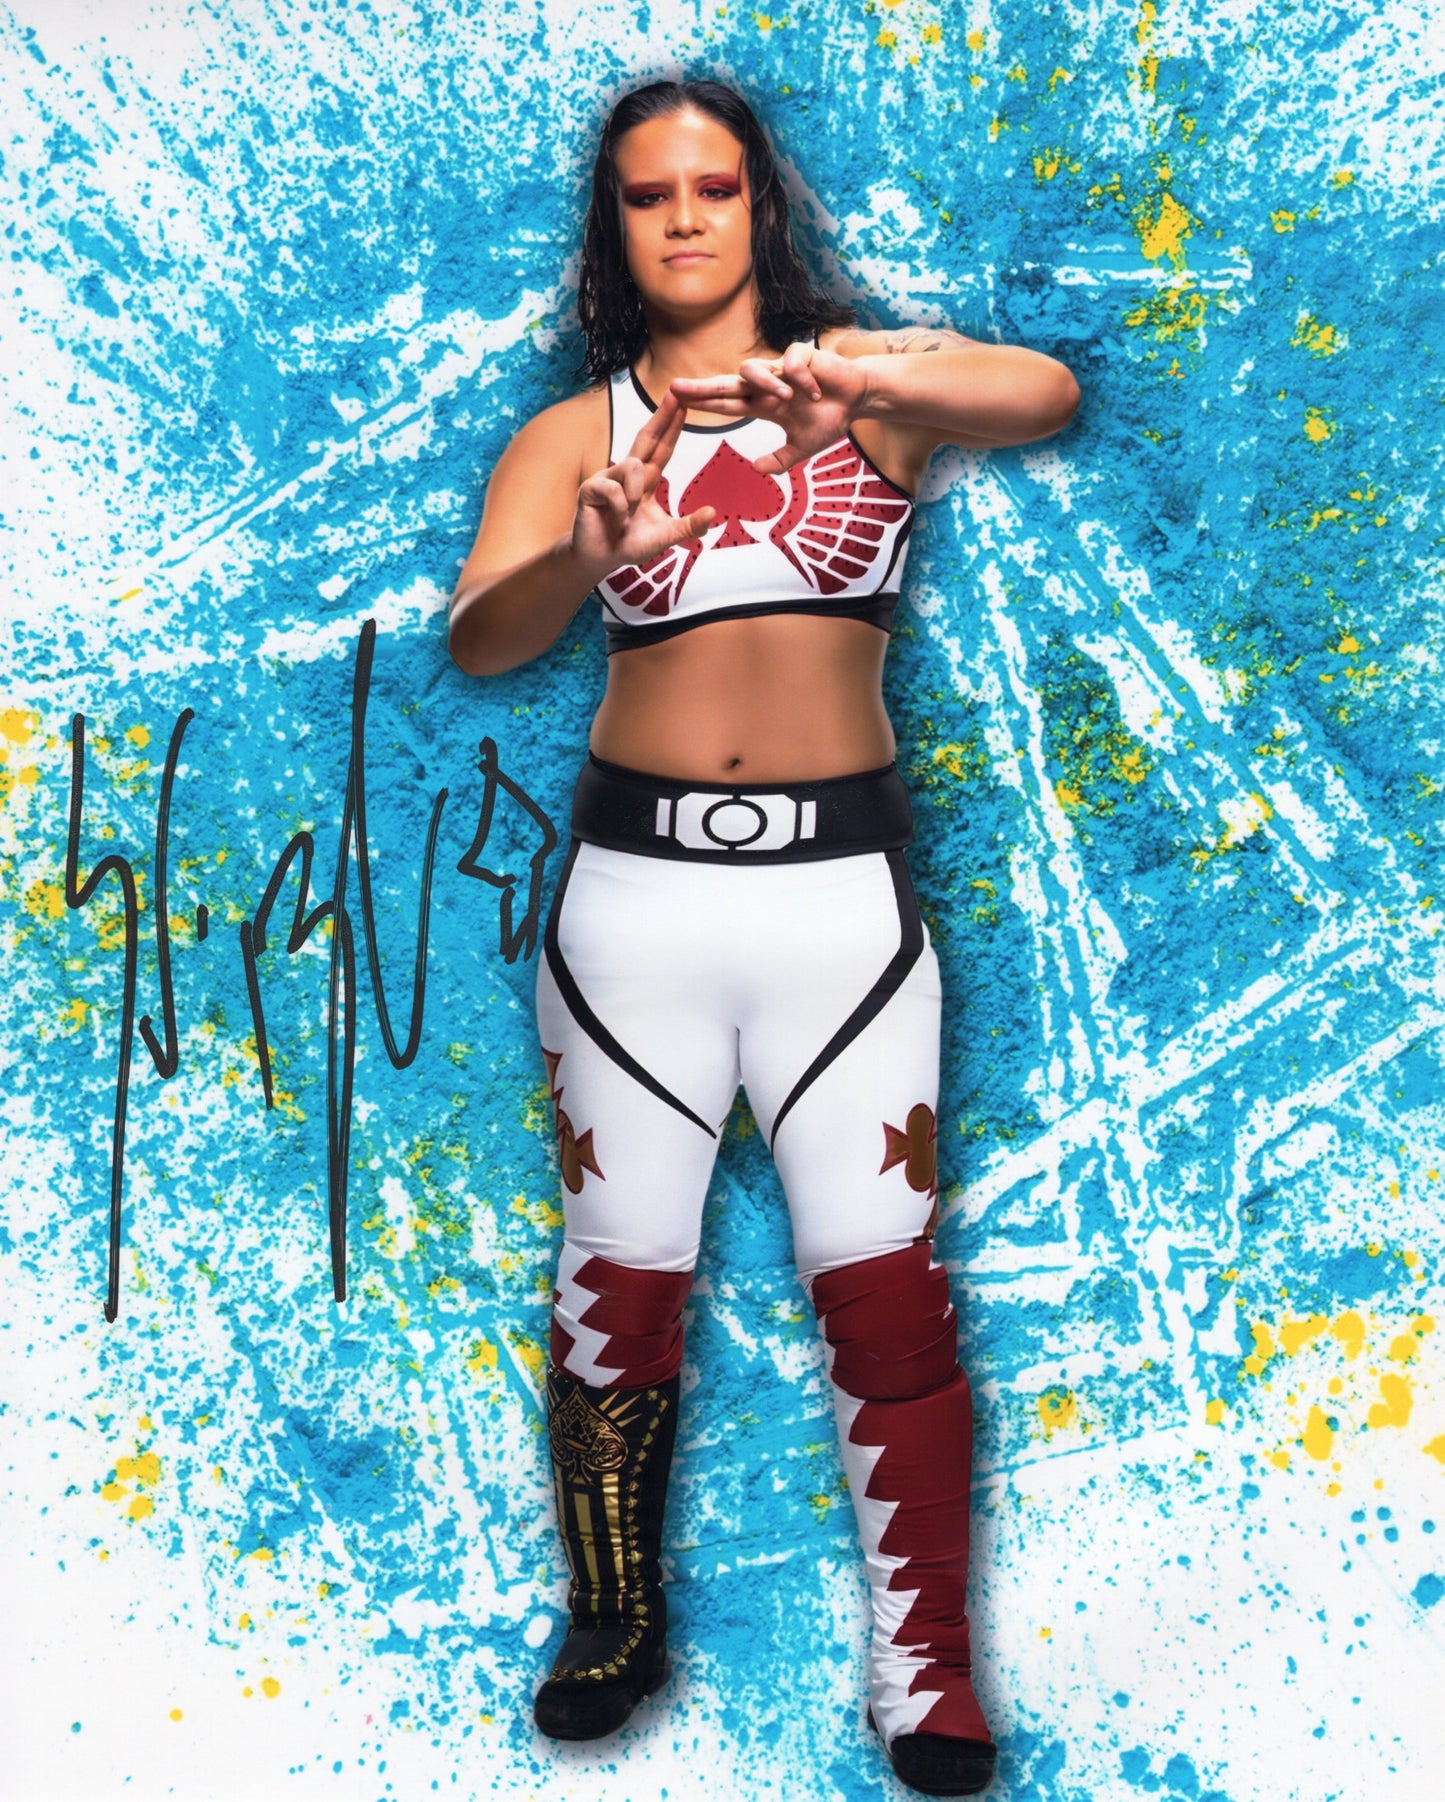 Shayna Baszler (metallic 8x10) WWE WWF NXT photo signed auto autographed